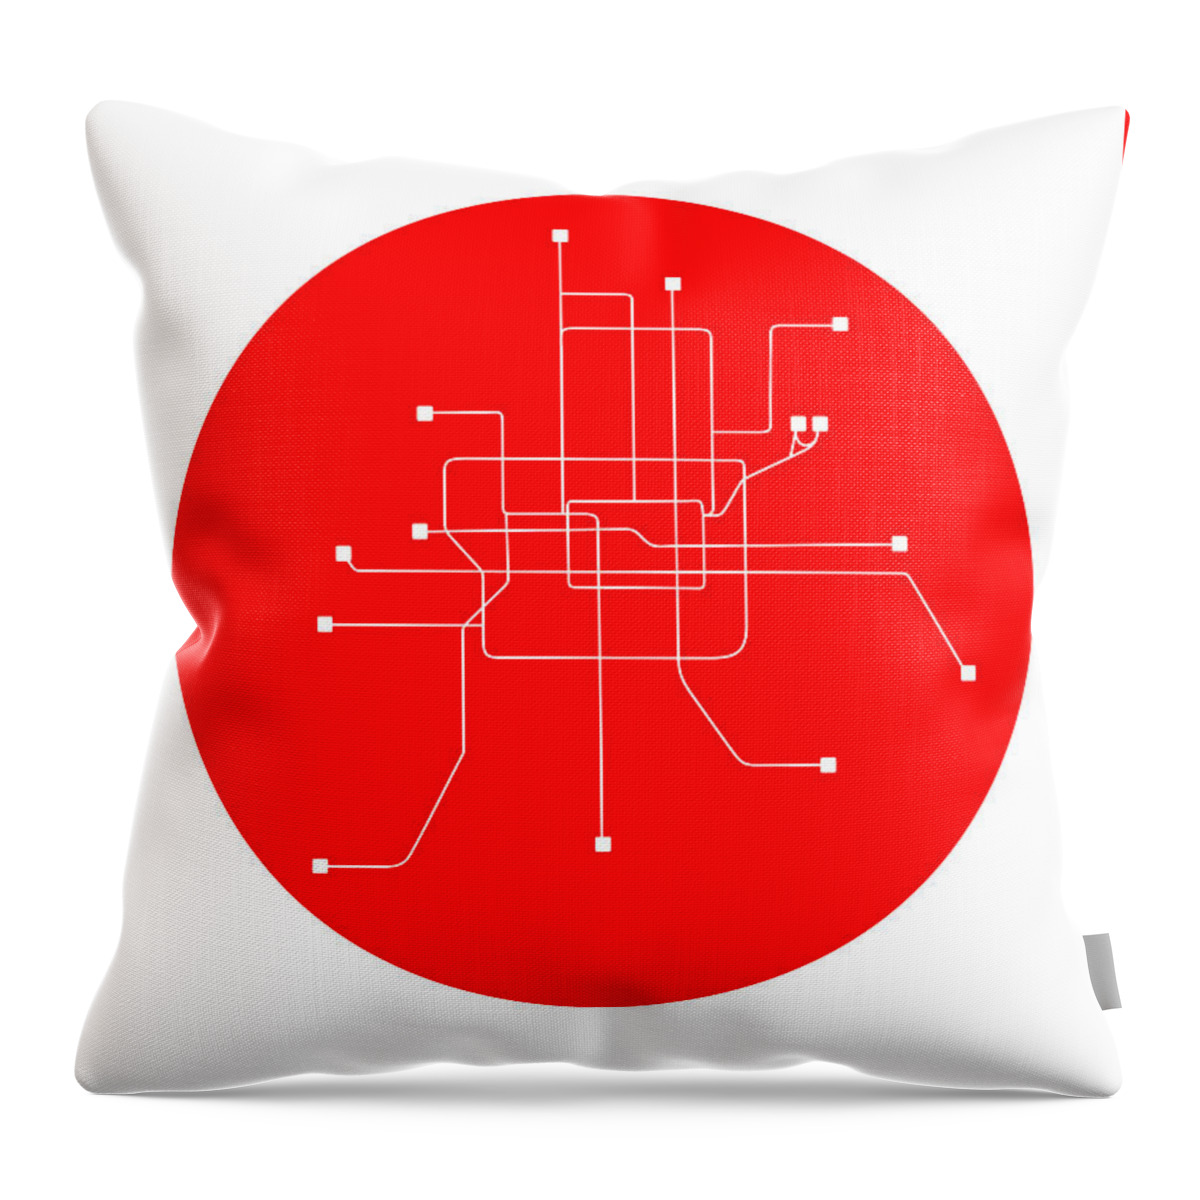 Beijing Throw Pillow featuring the digital art Beijing Red Subway Map by Naxart Studio